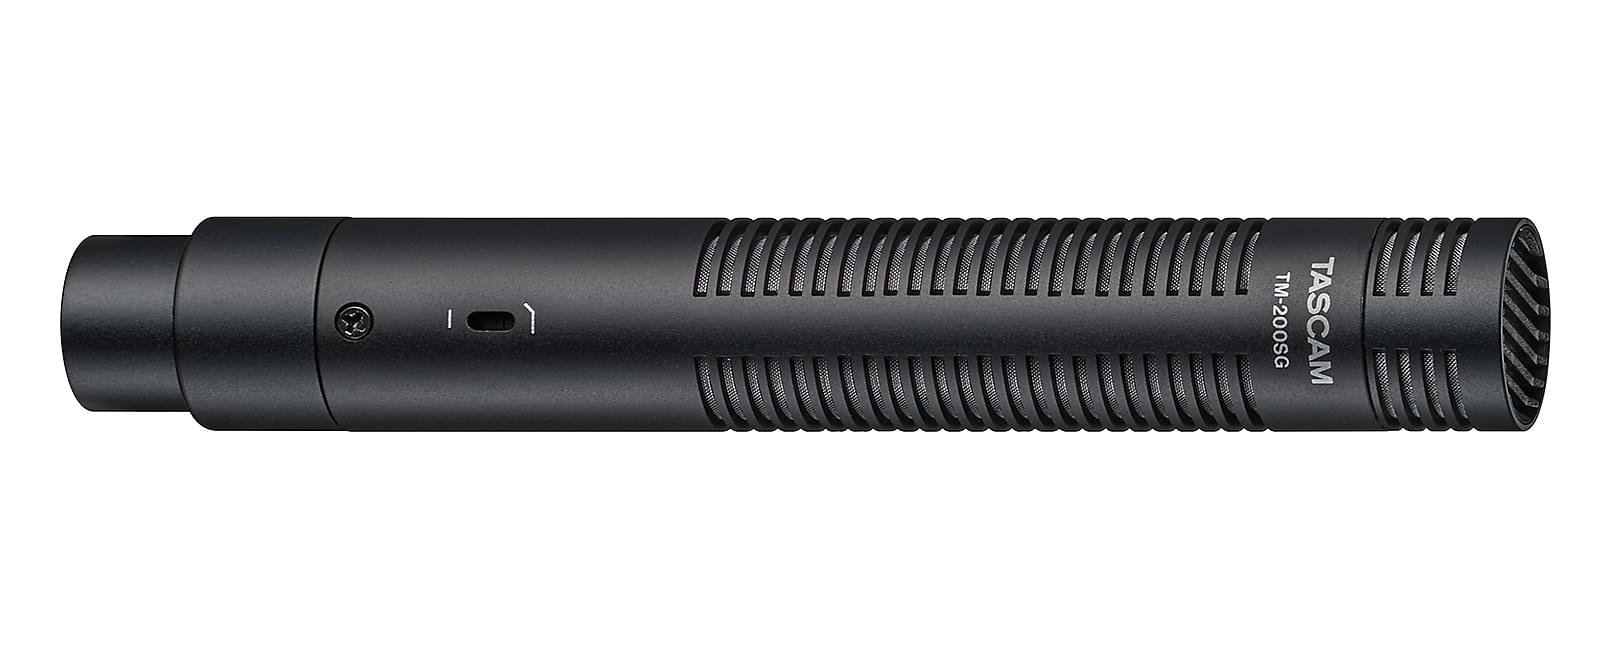 Shotgun Condenser Microphone for Video Shooting | Tascam TM-200SG